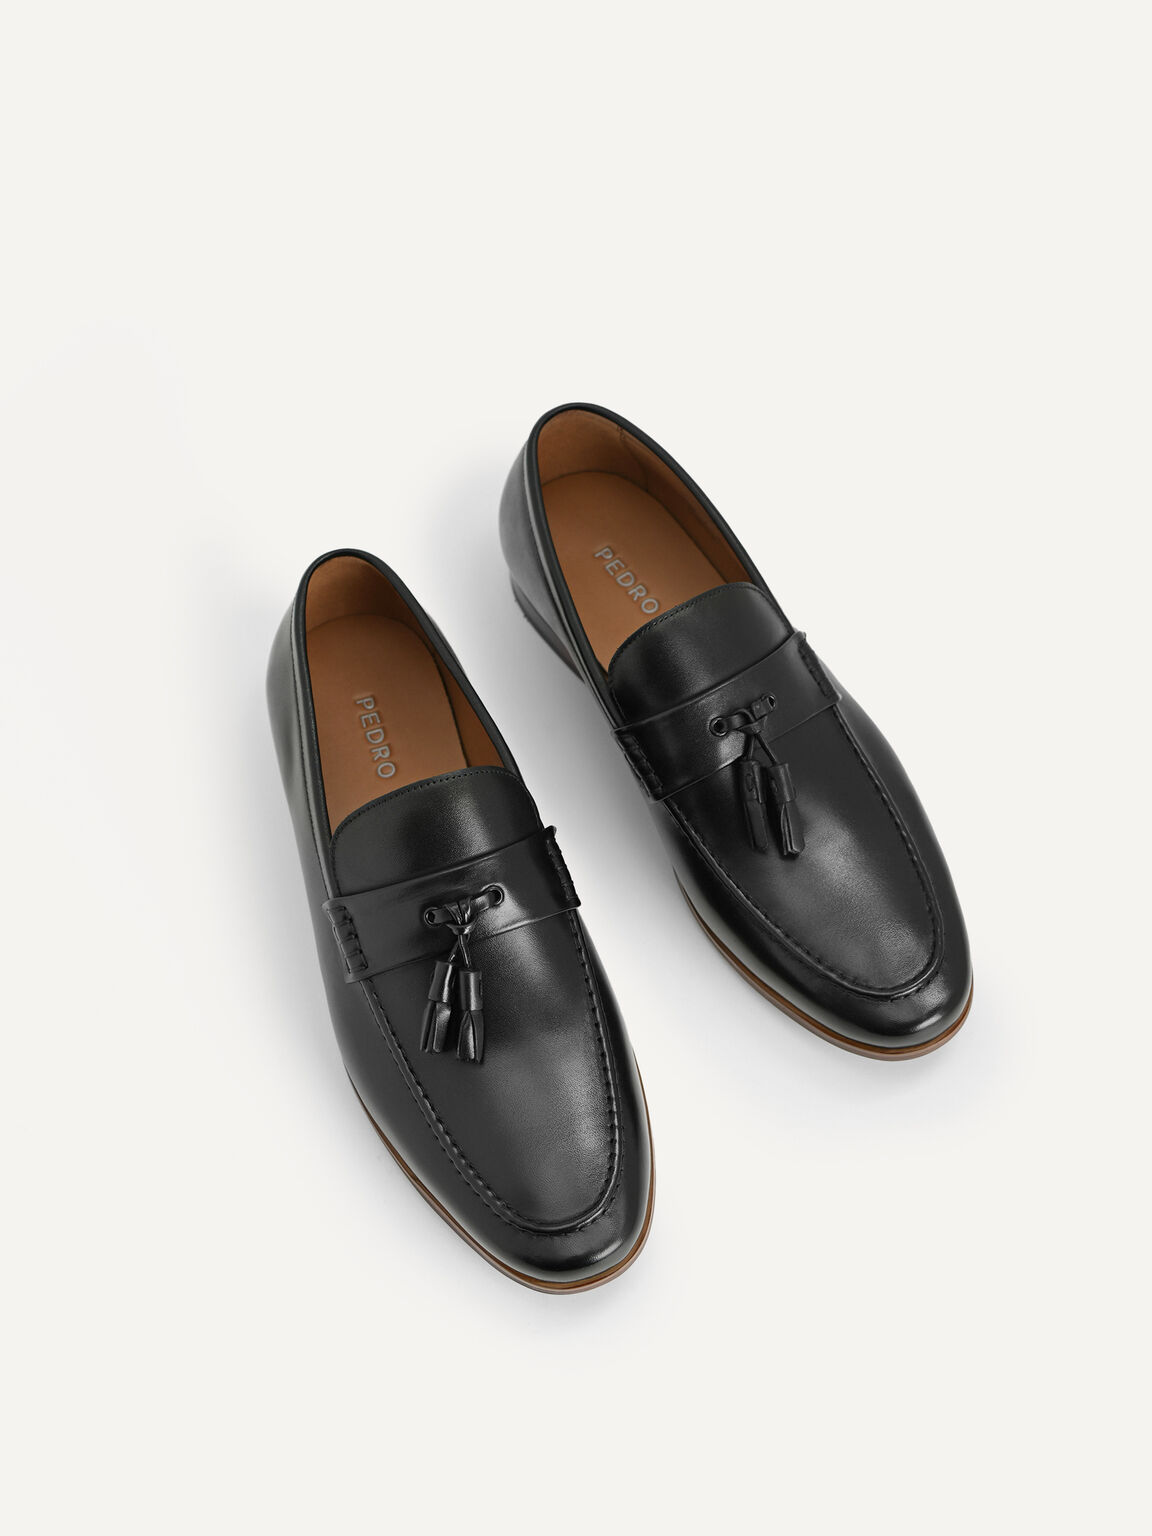 Leather Tasselled Loafers, Black, hi-res